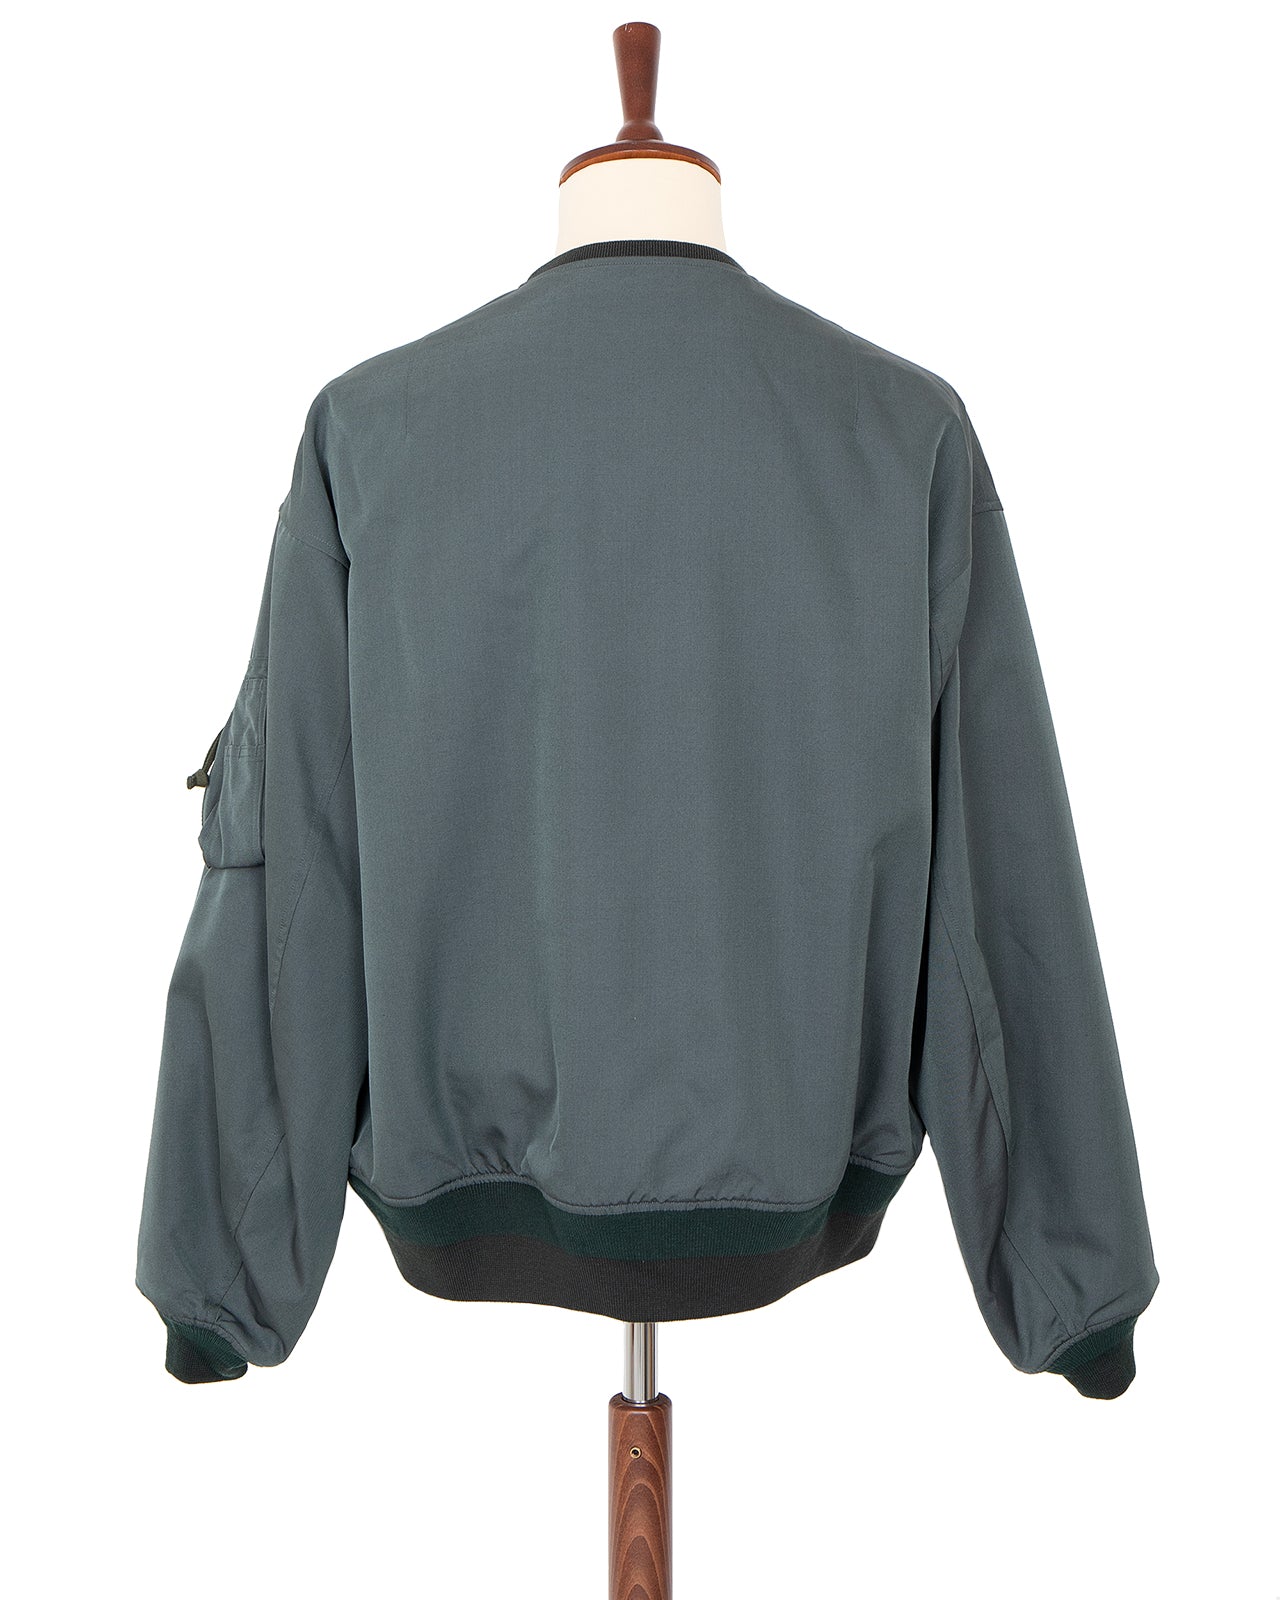 Visvim Thorson Jacket (Mawata), Green